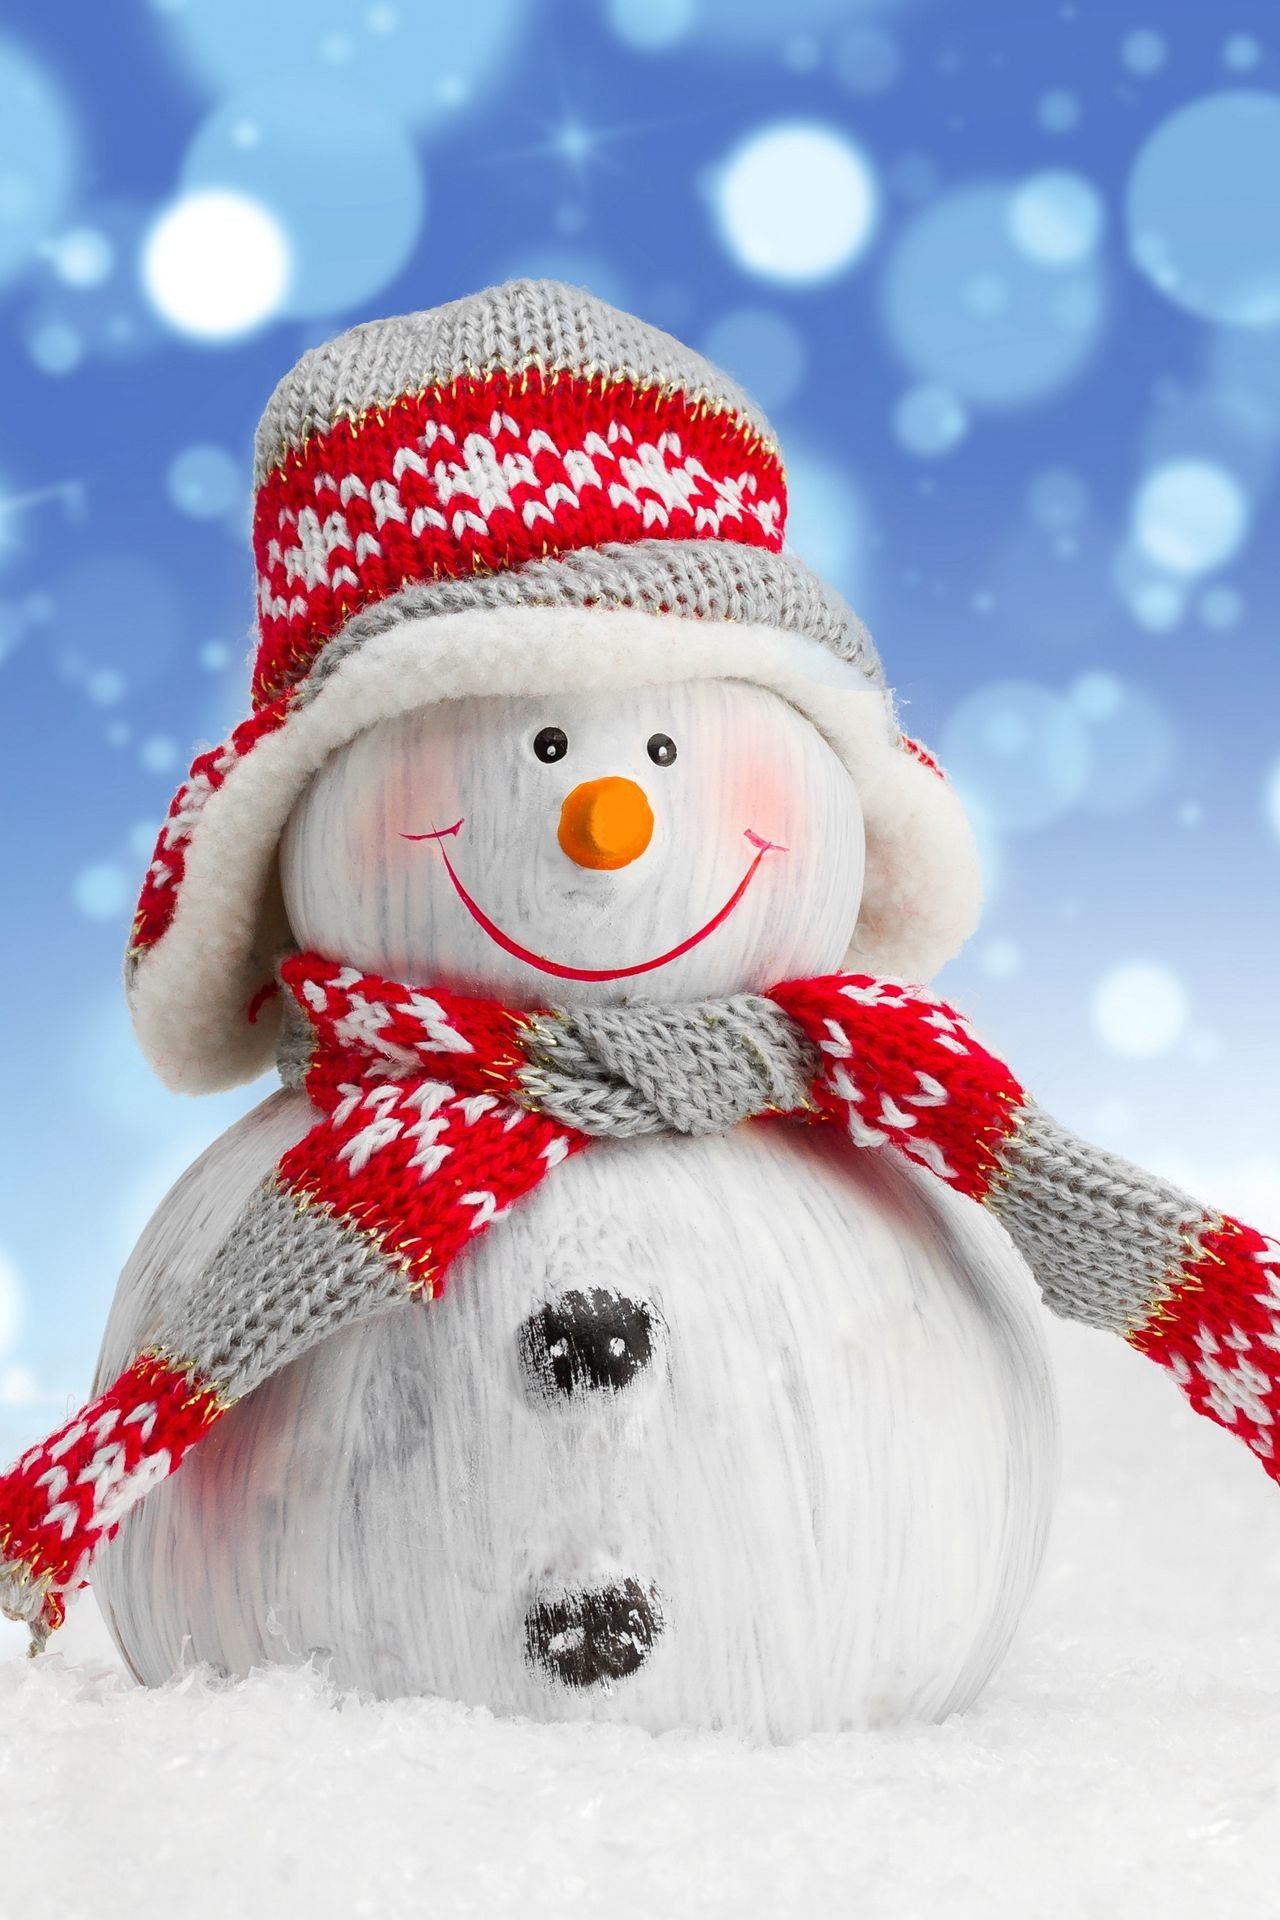 1280x1920 winter snow merry christmas snowman red white 